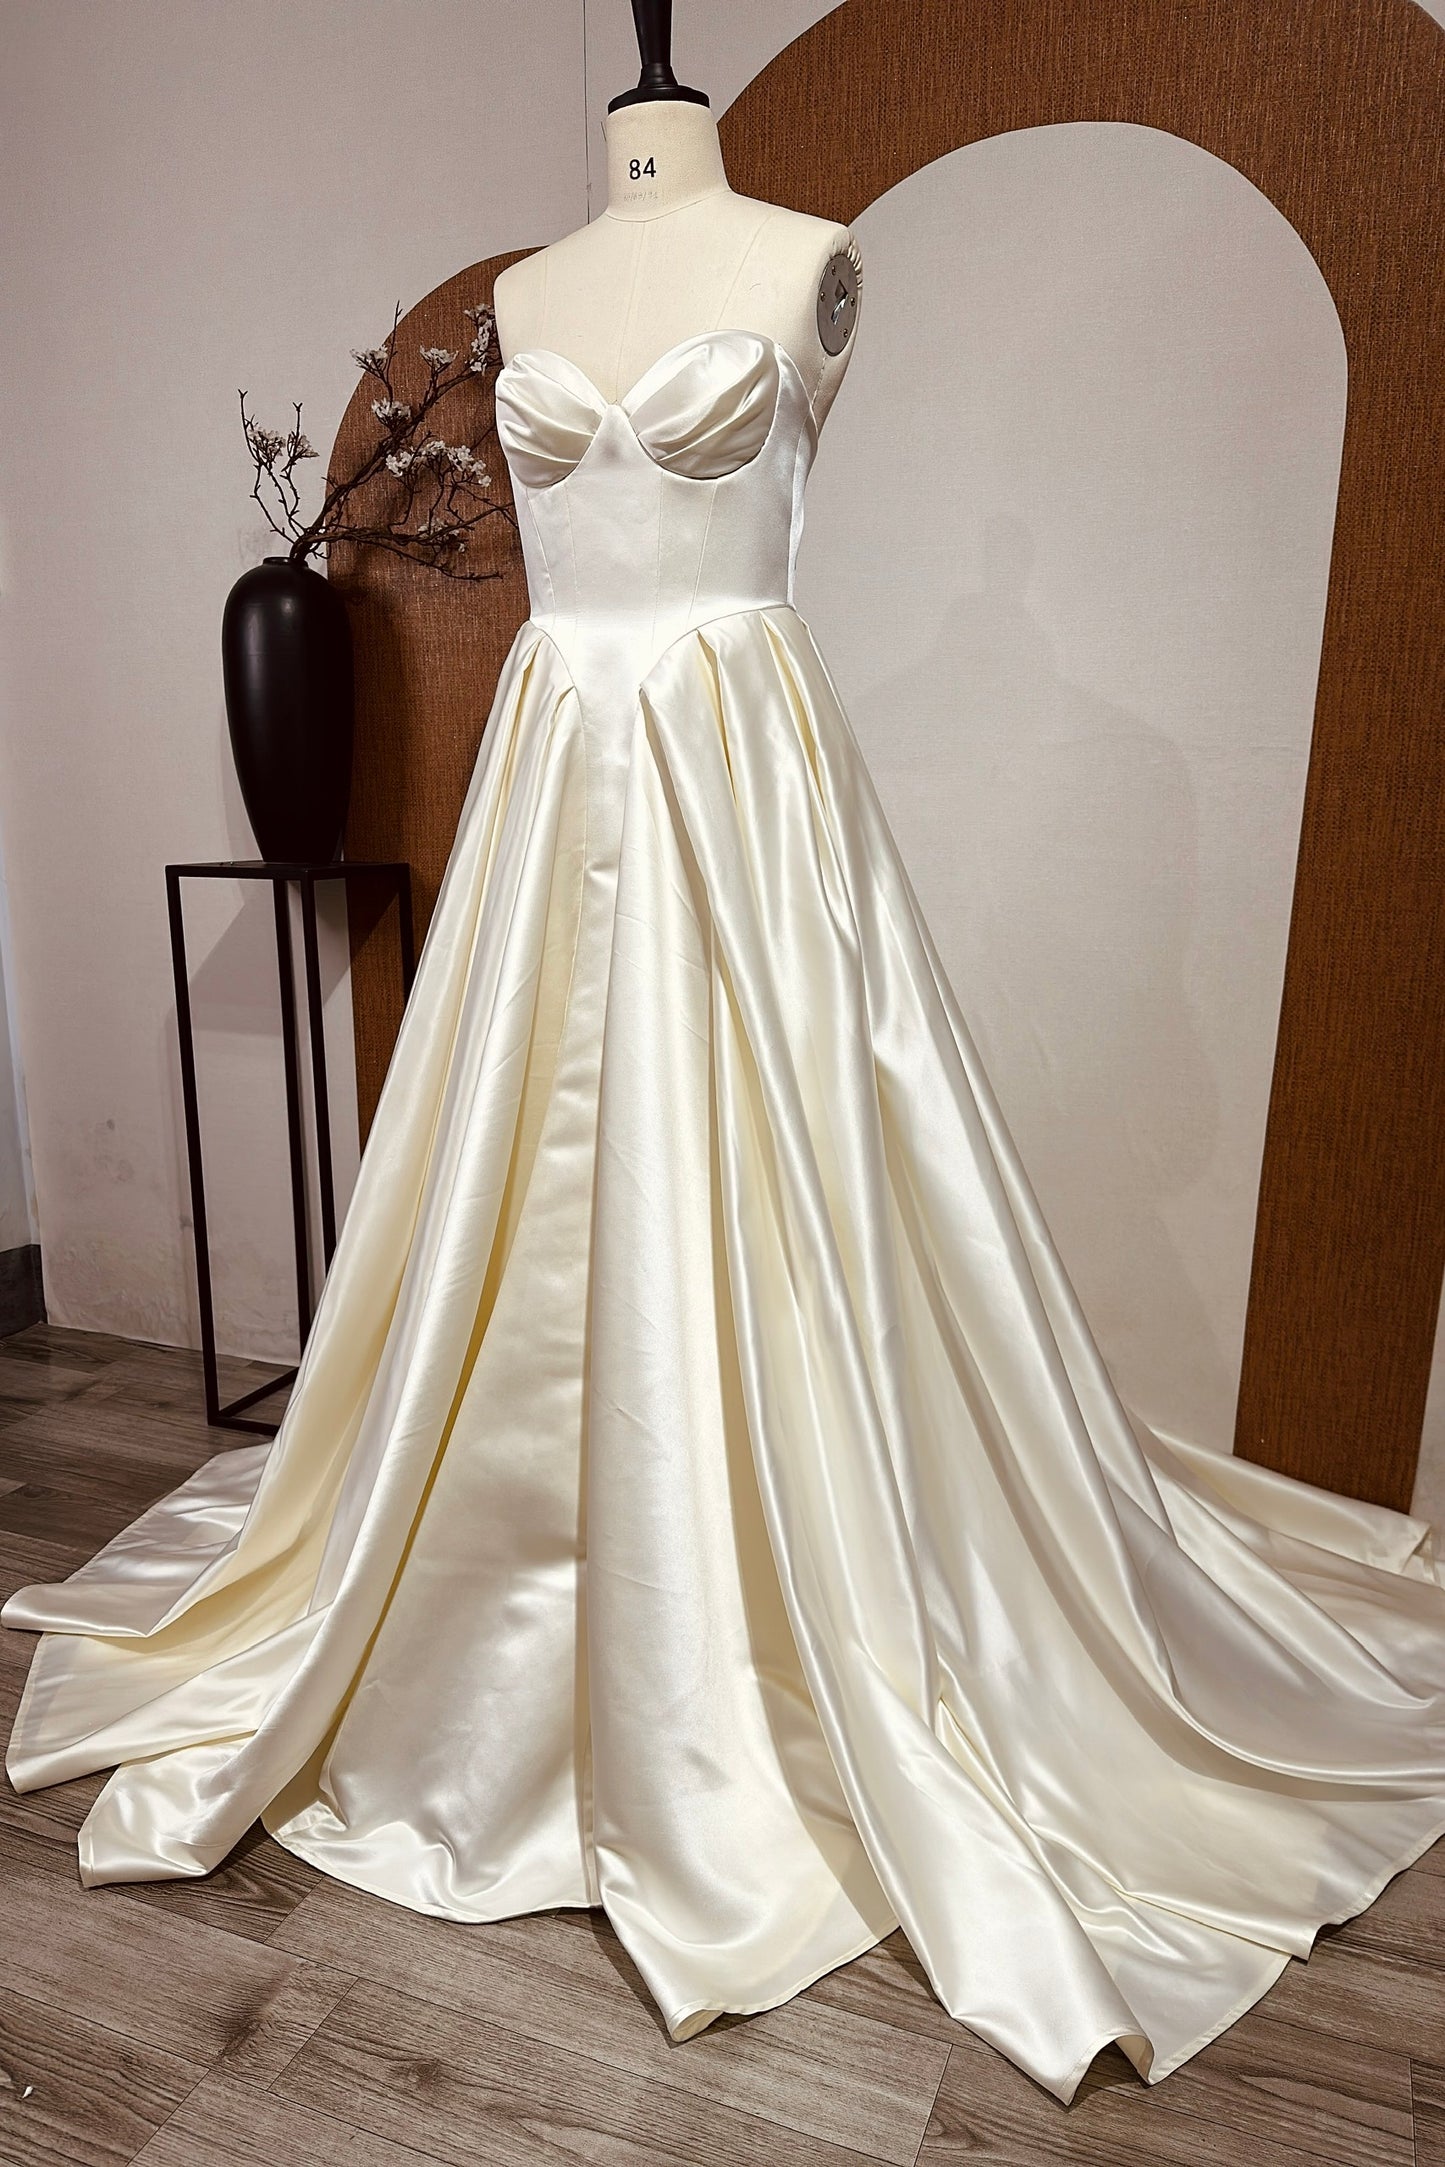 Irene - Unique A-Line Corset Wedding Dress, Customized Satin Wedding Dress as per Bride's Request.